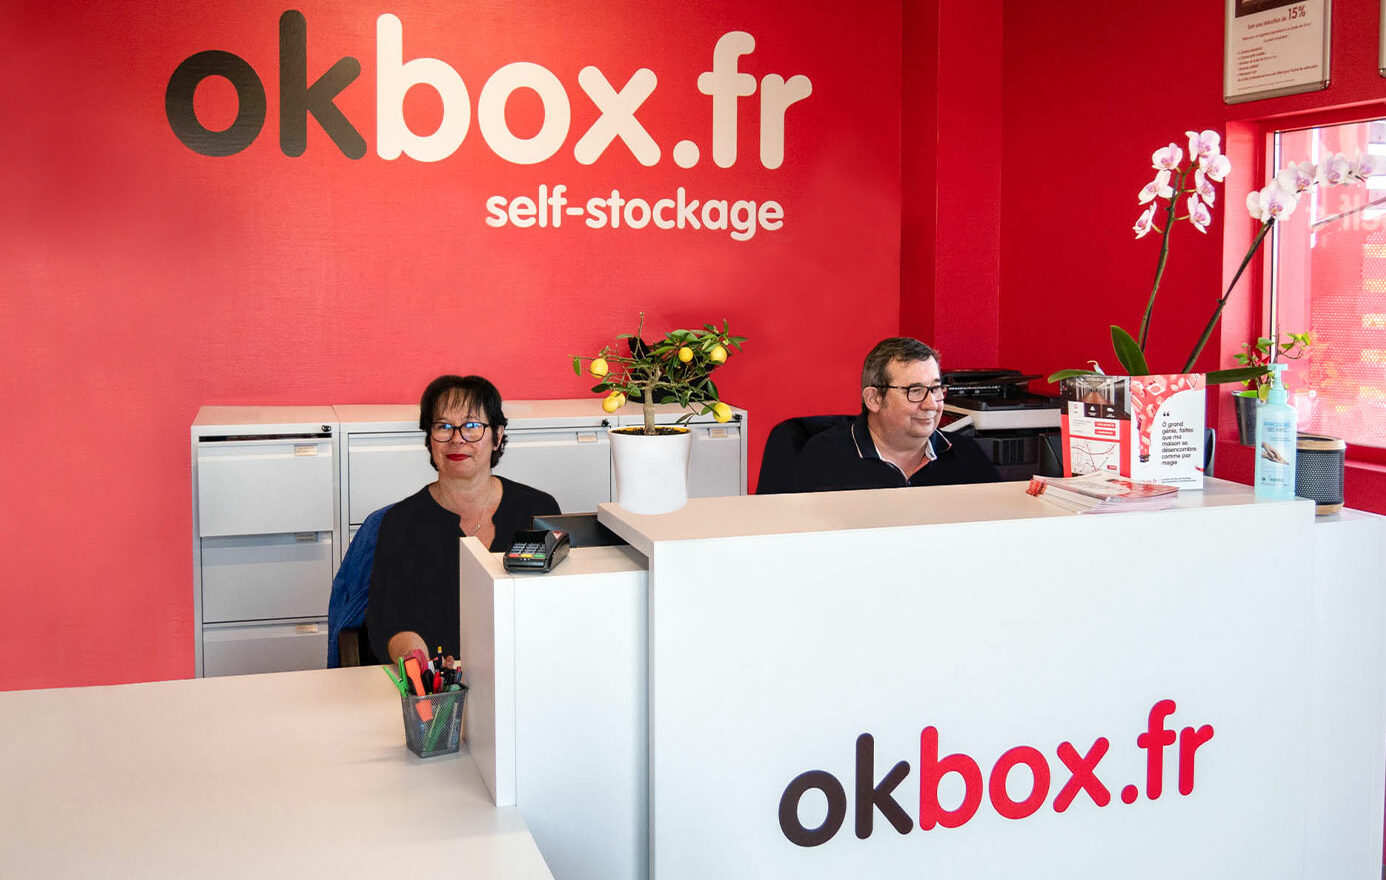 okbox caen self stockage office manager